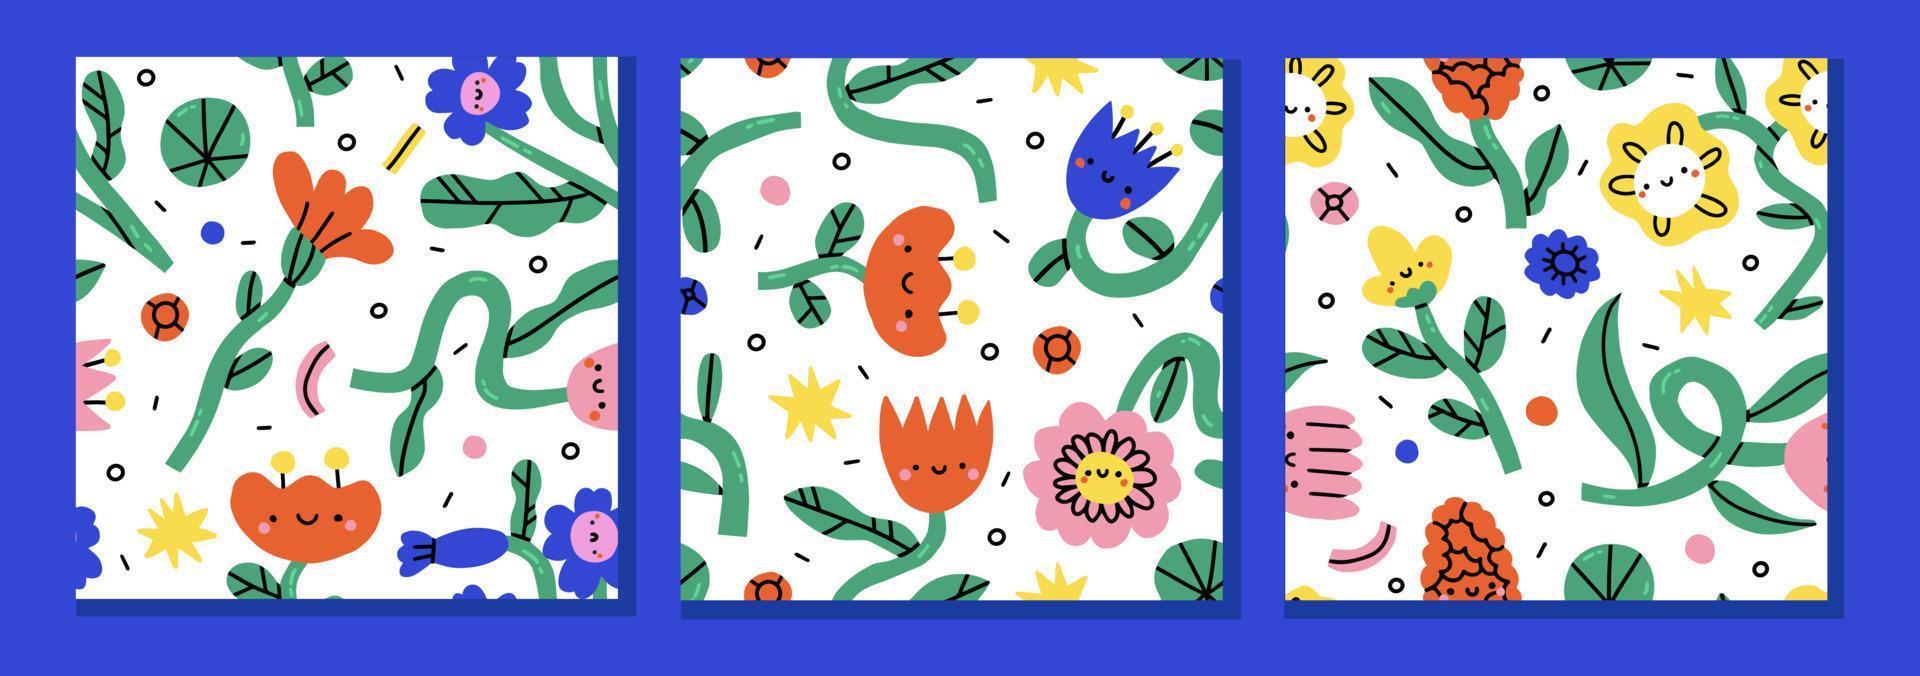 reeks van 3 schattig grappig kawaii glimlach gezicht bloemen patroon.vector tekenfilm kawaii karakter illustratie ontwerp. positief glimlach gezicht, tuin bundel reeks concept. grappig gelukkig madeliefje met ogen en glimlach. vector